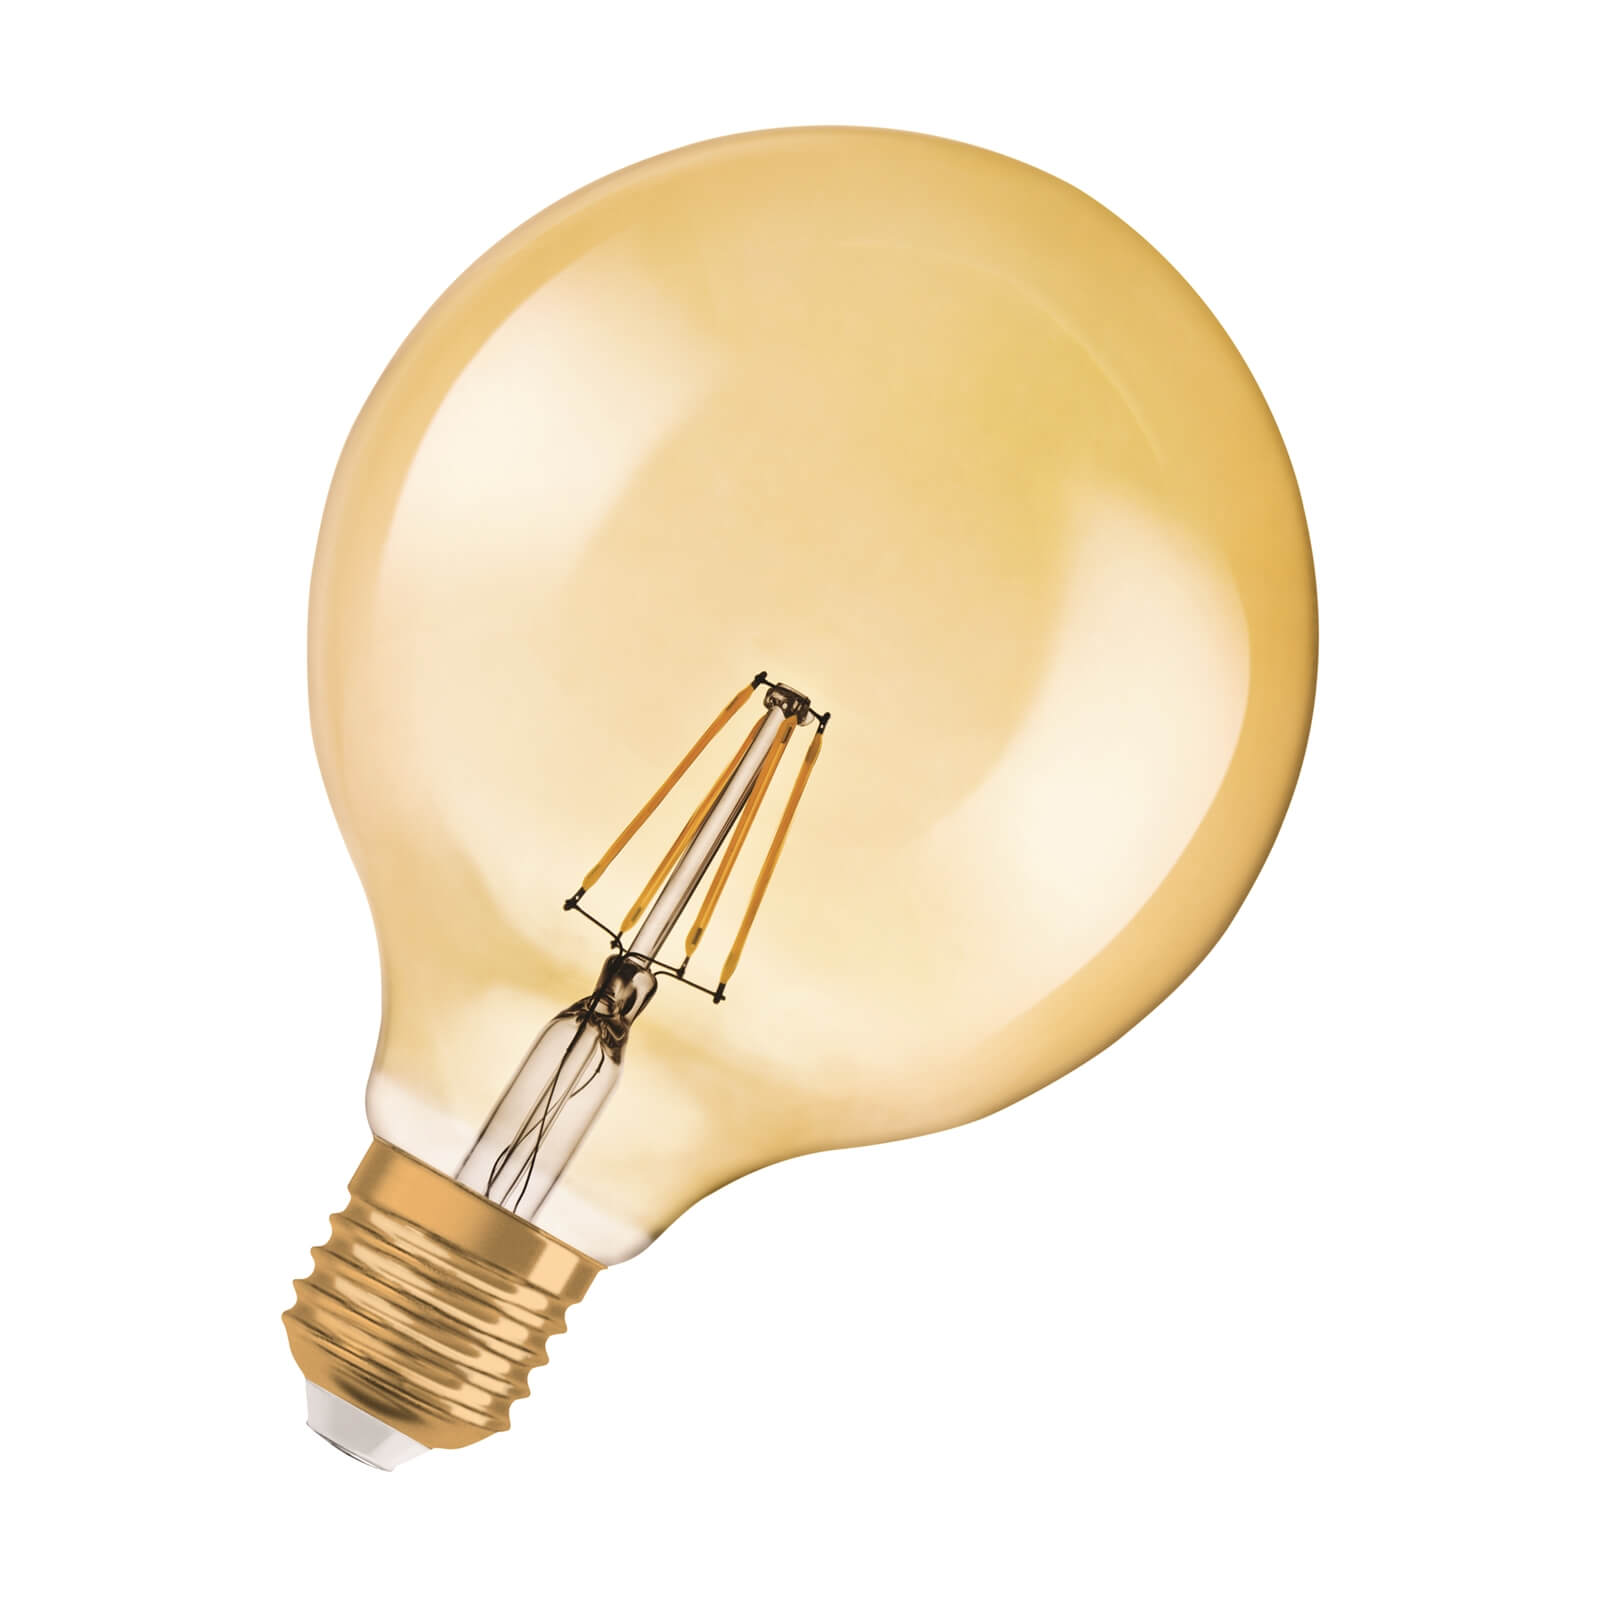 Osram 1906 LED Globe125 Vintageage Gold 36W ES Light Bulb